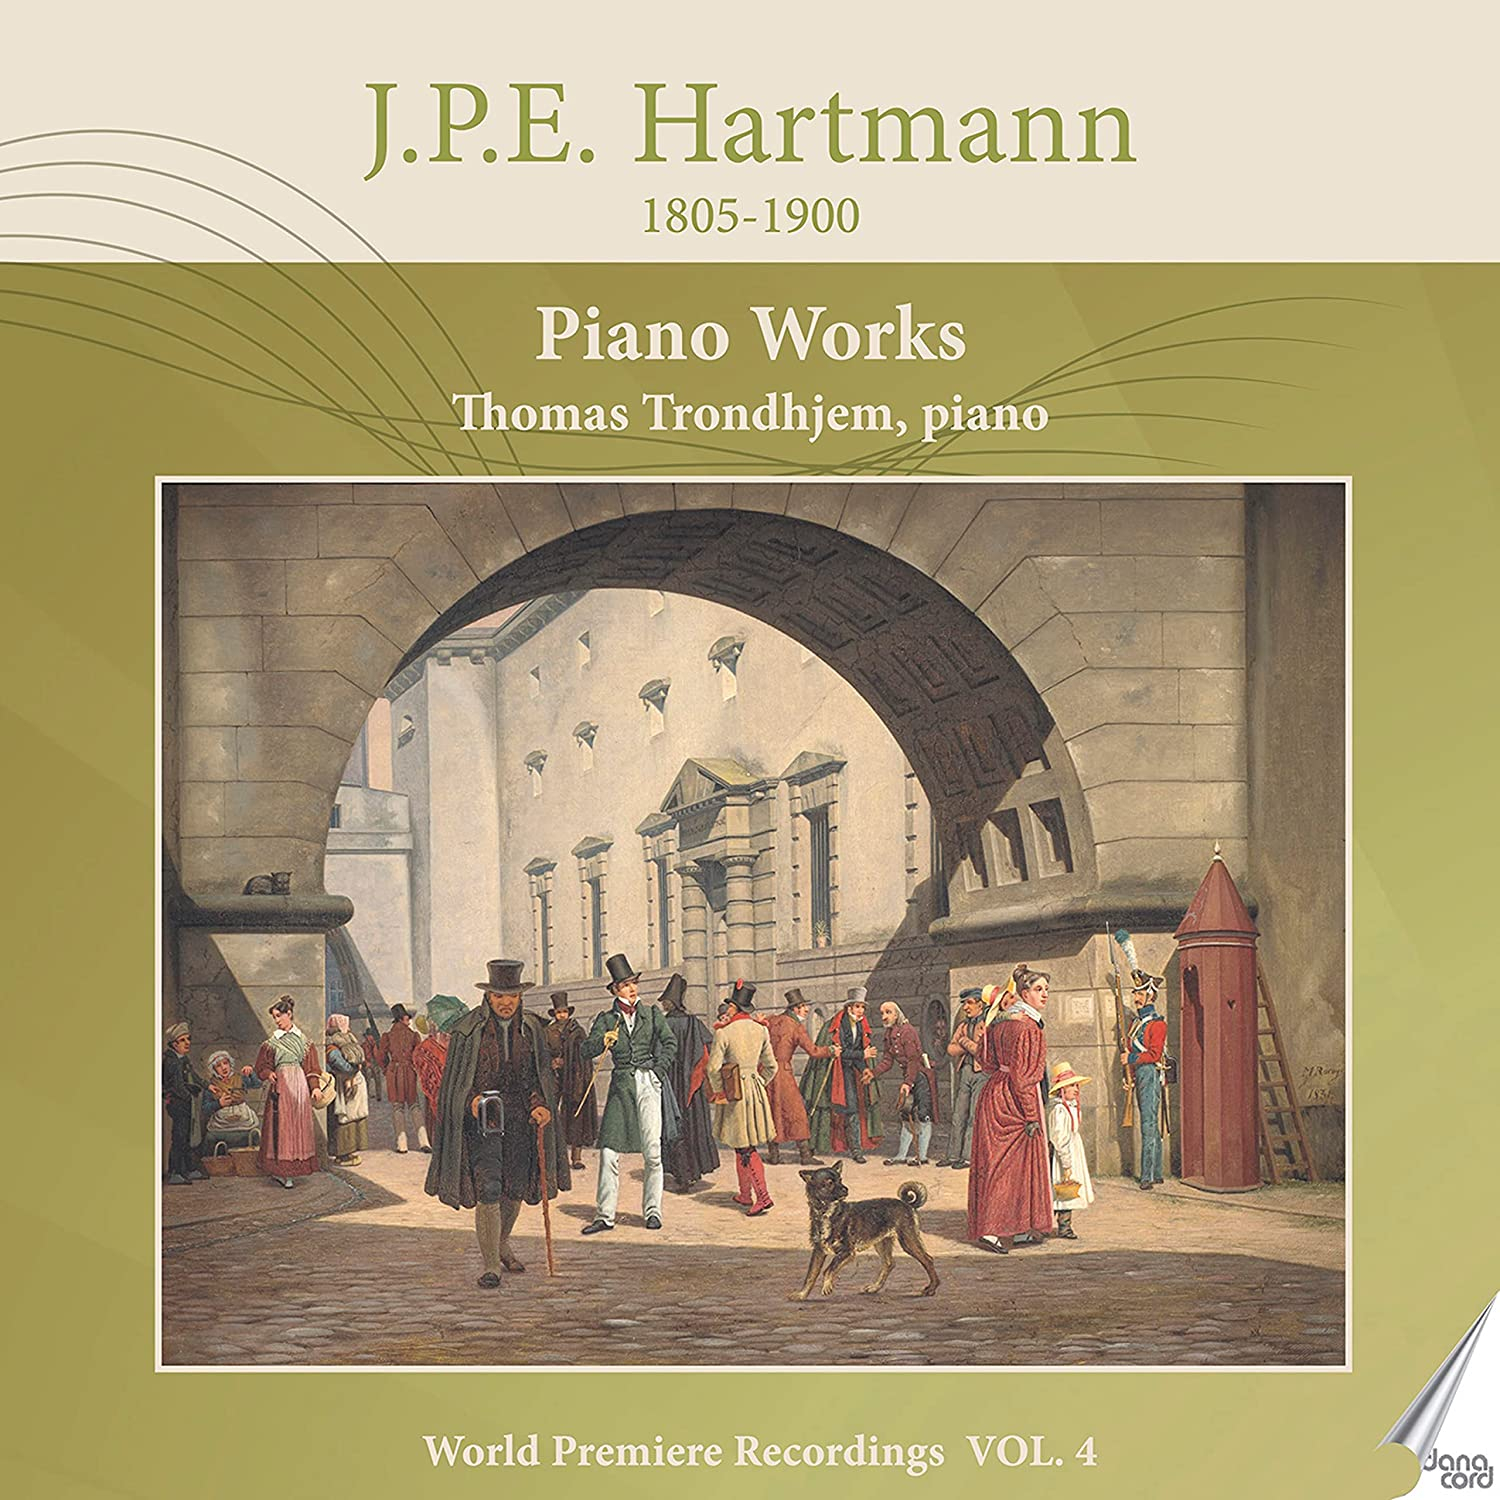 J.P.E. HARTMANN: PIANO WORKS